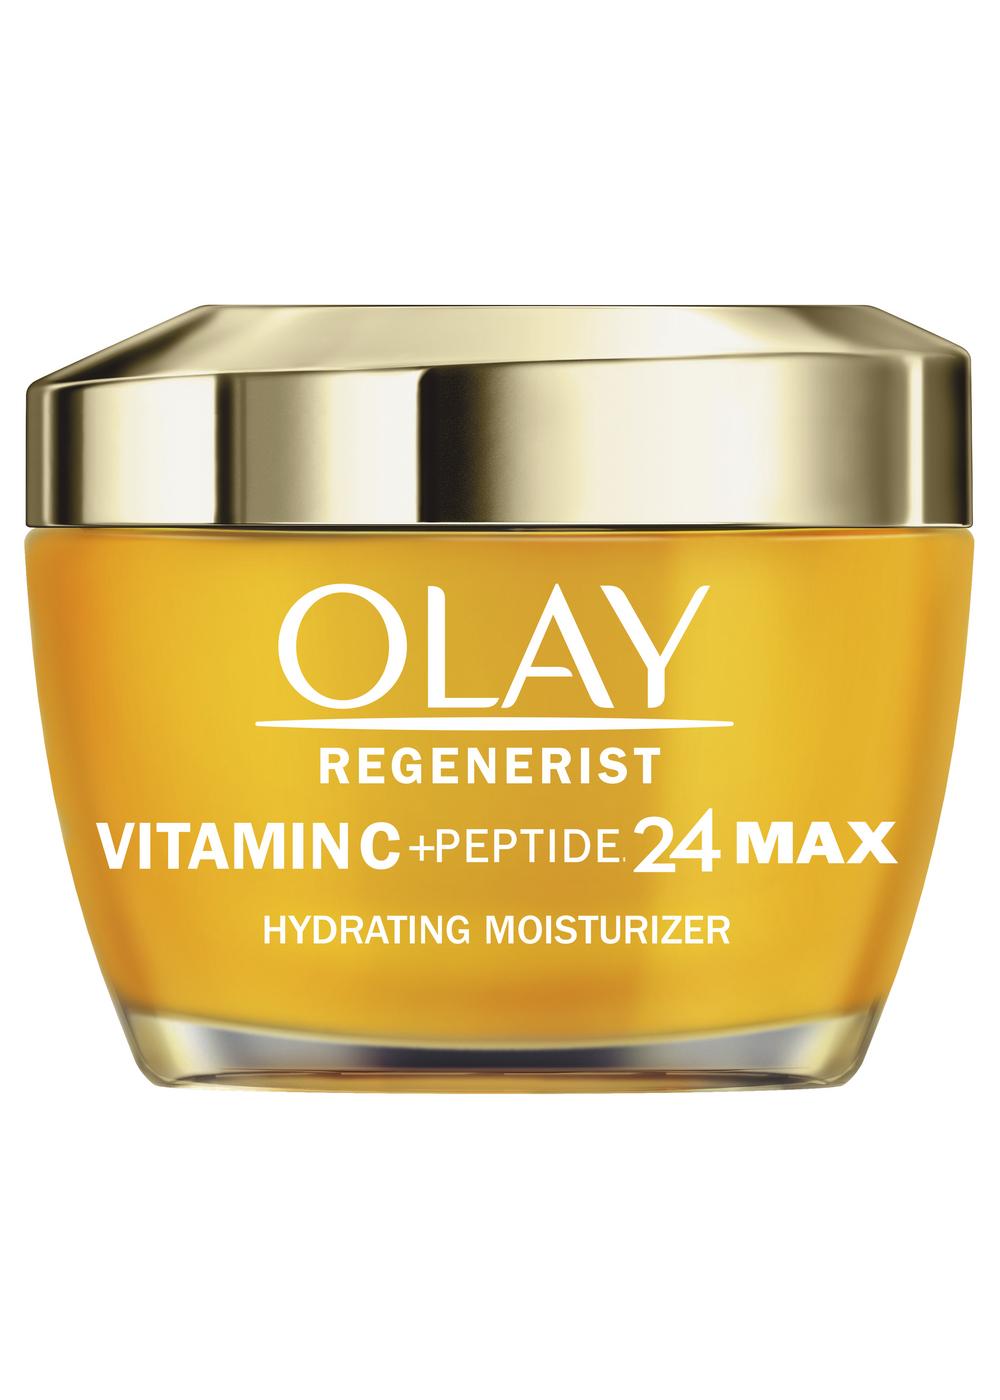 Olay Regenerist Vitamin C + Peptide 24 Max Hydrating Moisturizer; image 2 of 2